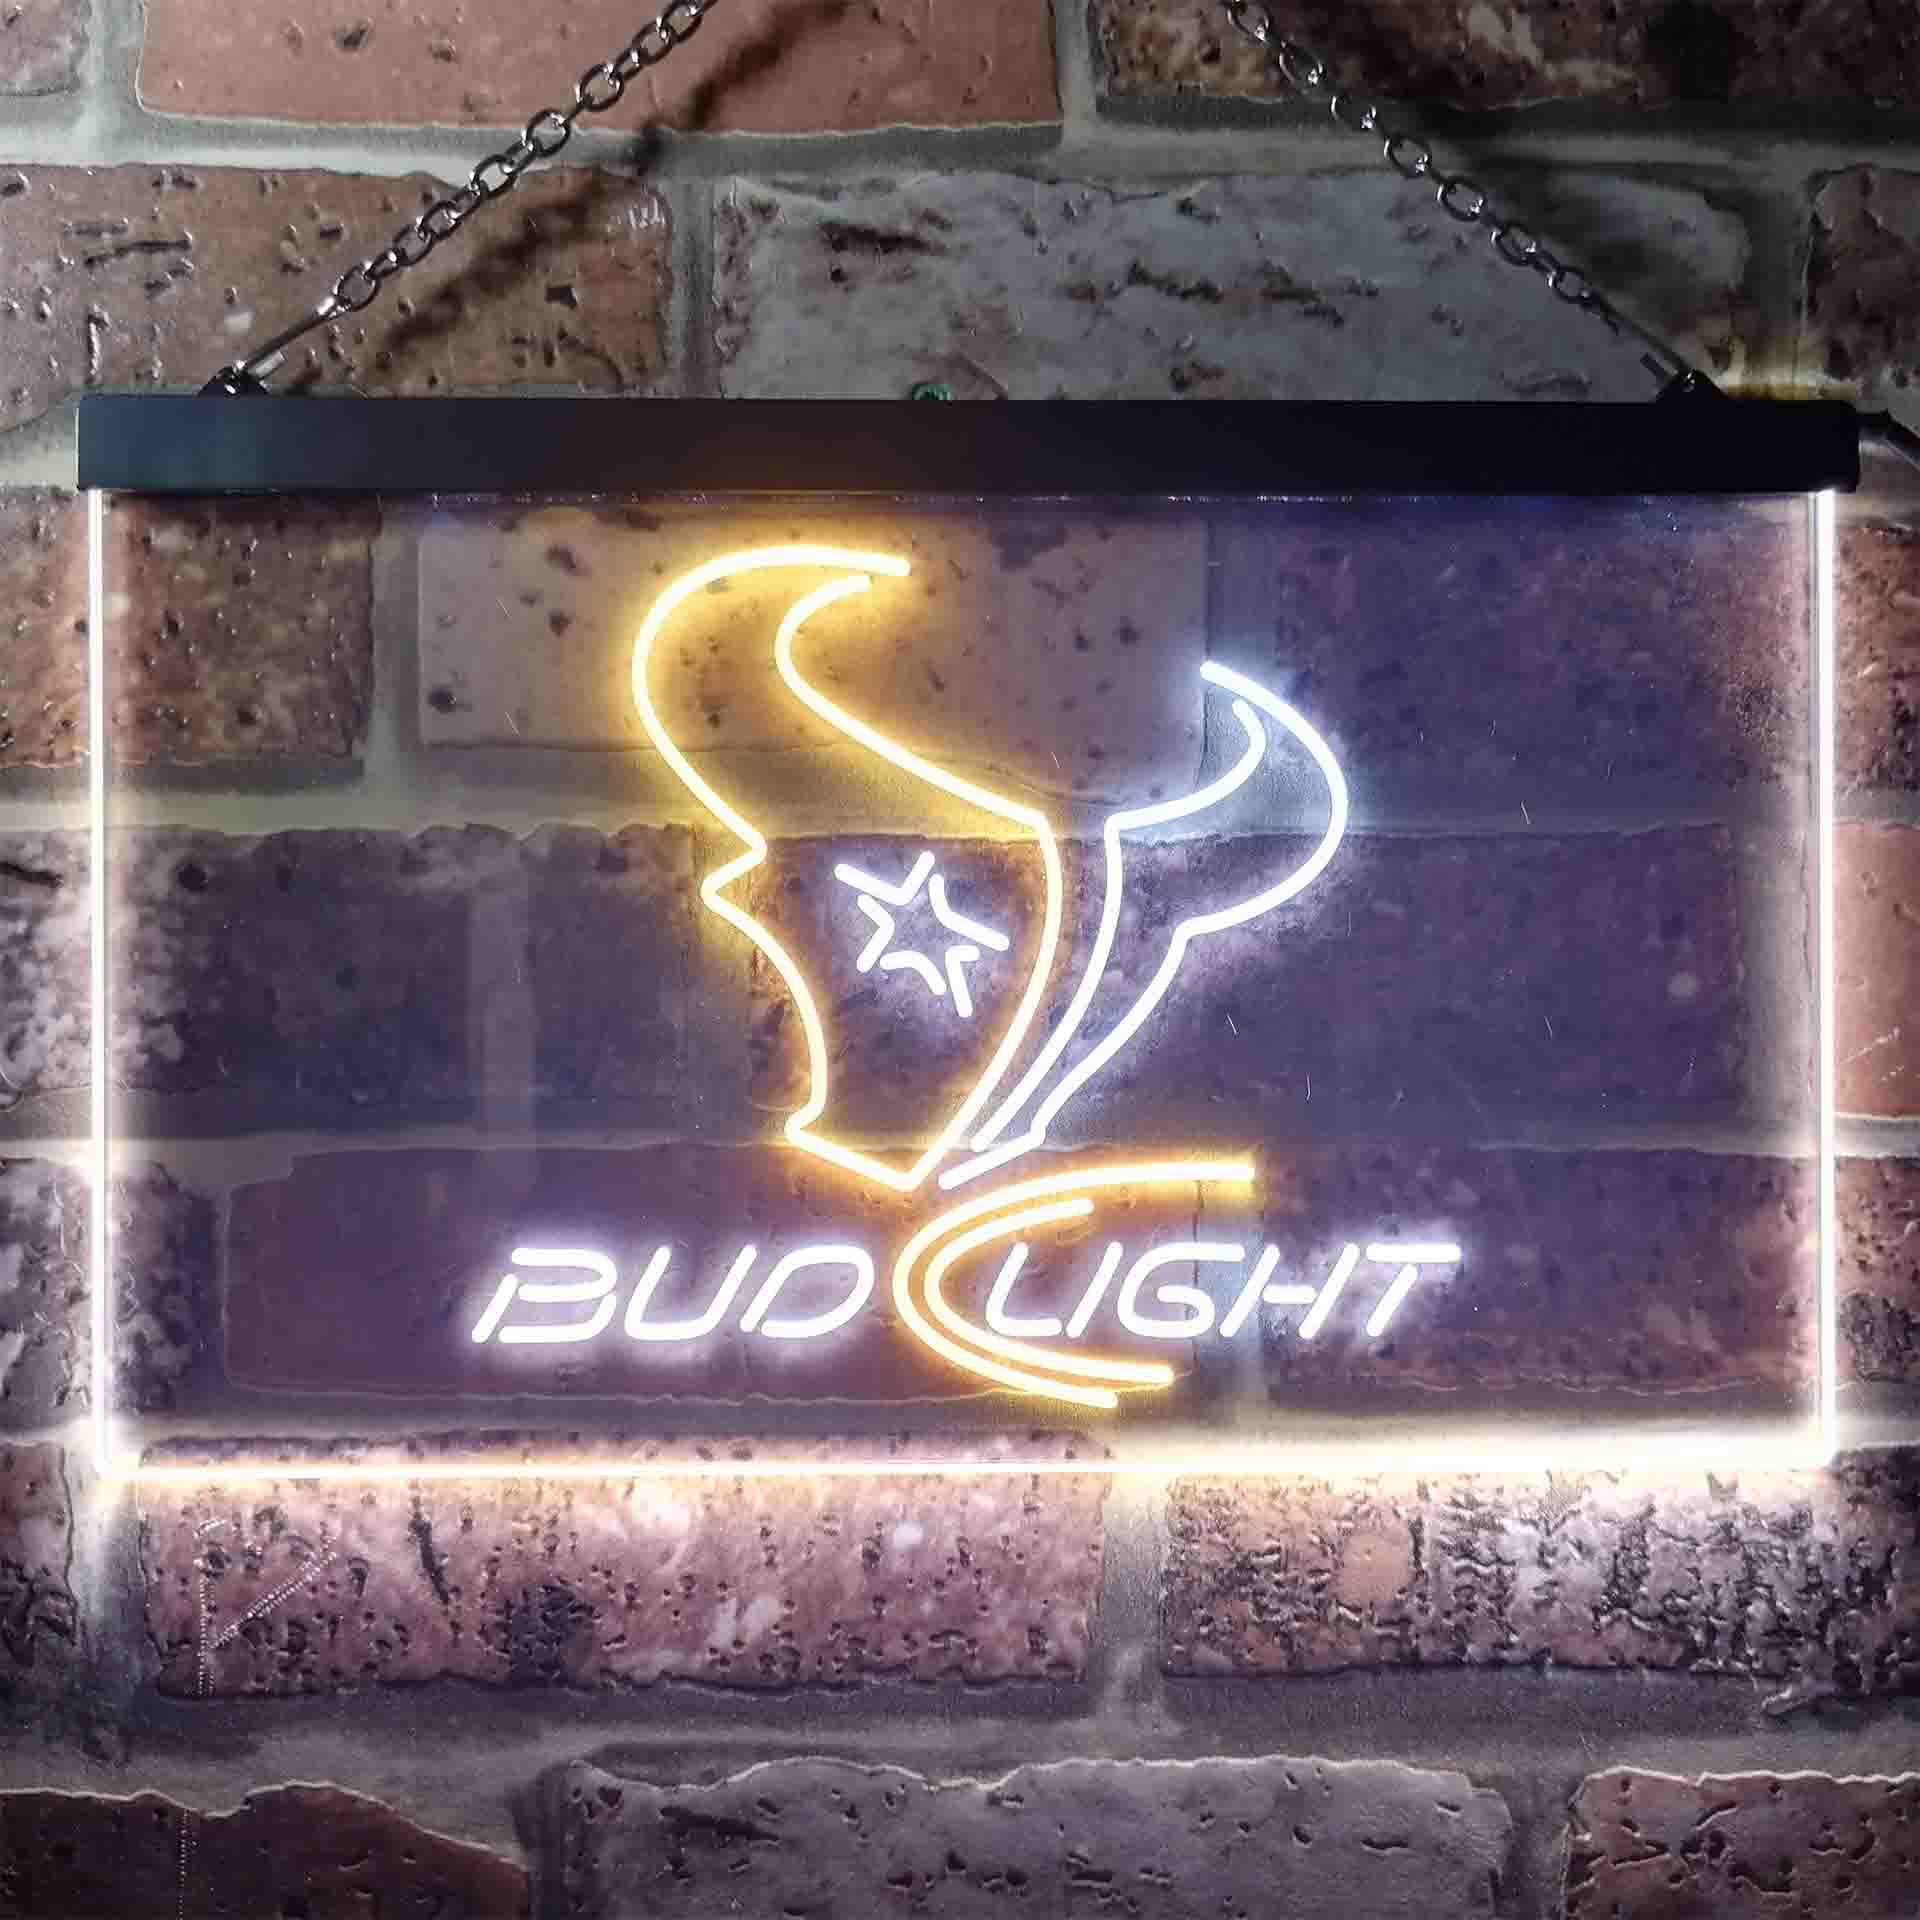 Houston Texans Bud Light Neon-Like LED Sign - ProLedSign